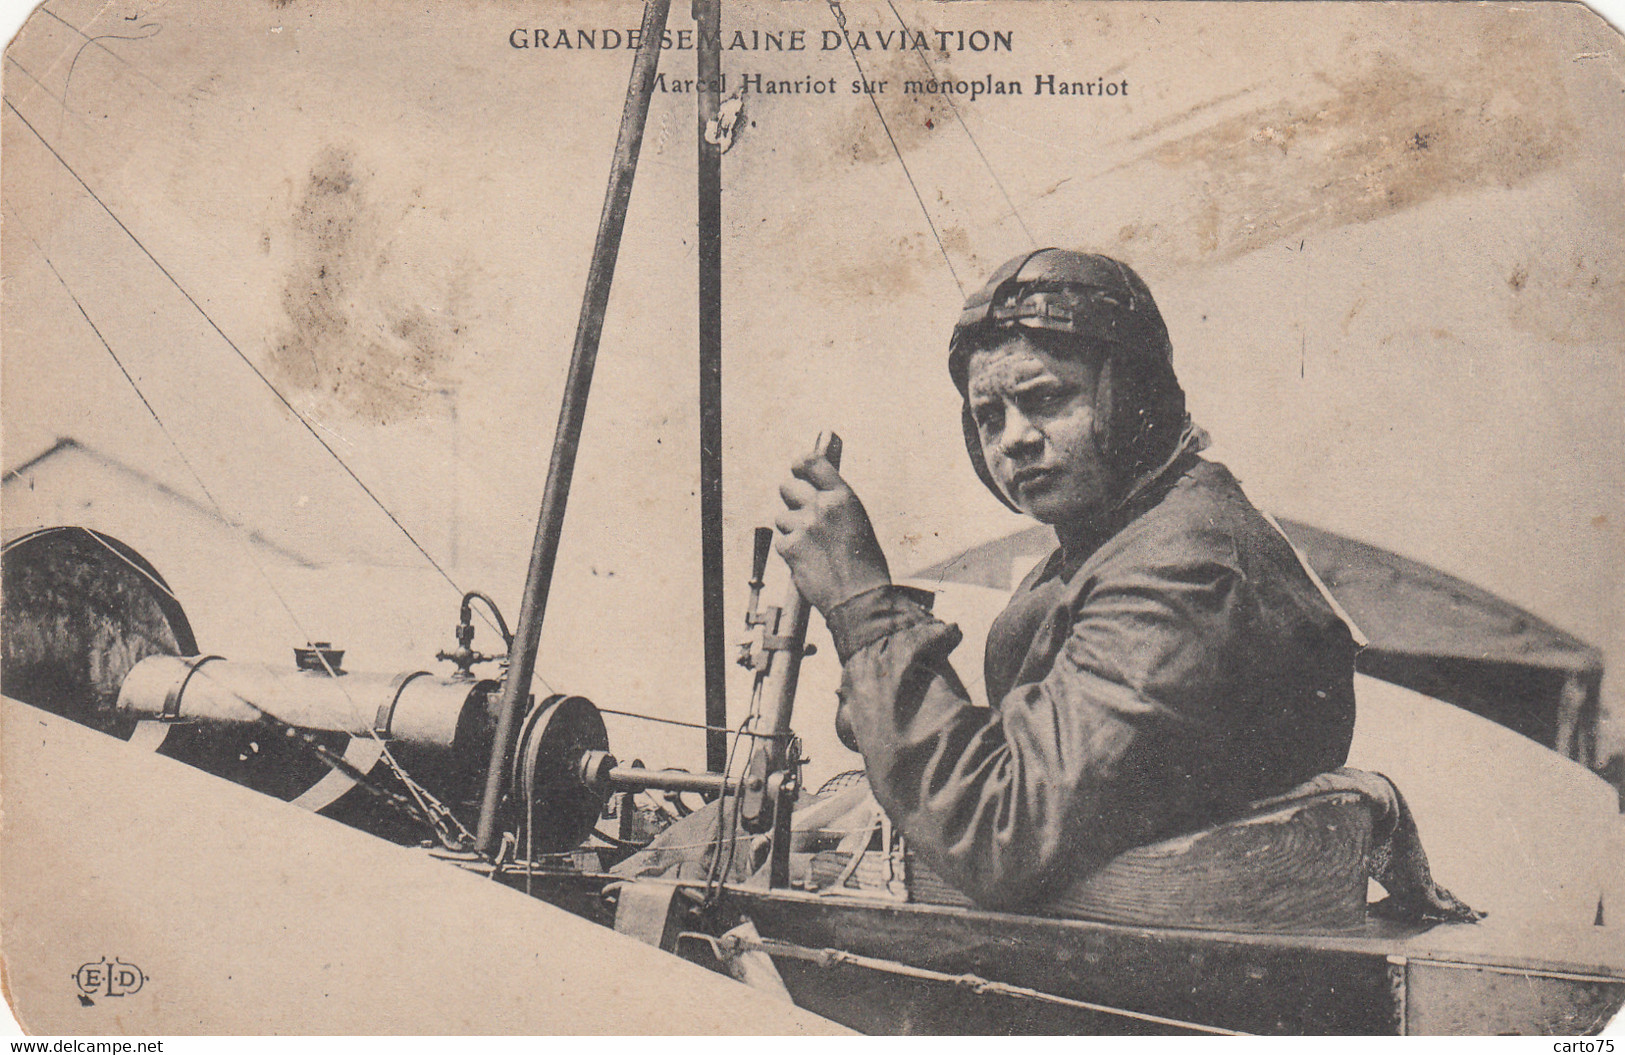 Aviation - Aviateurs - Grande Semaine D'Aviation - Aviateur Marcel Hanriot - Monoplan Hanriot - Airmen, Fliers